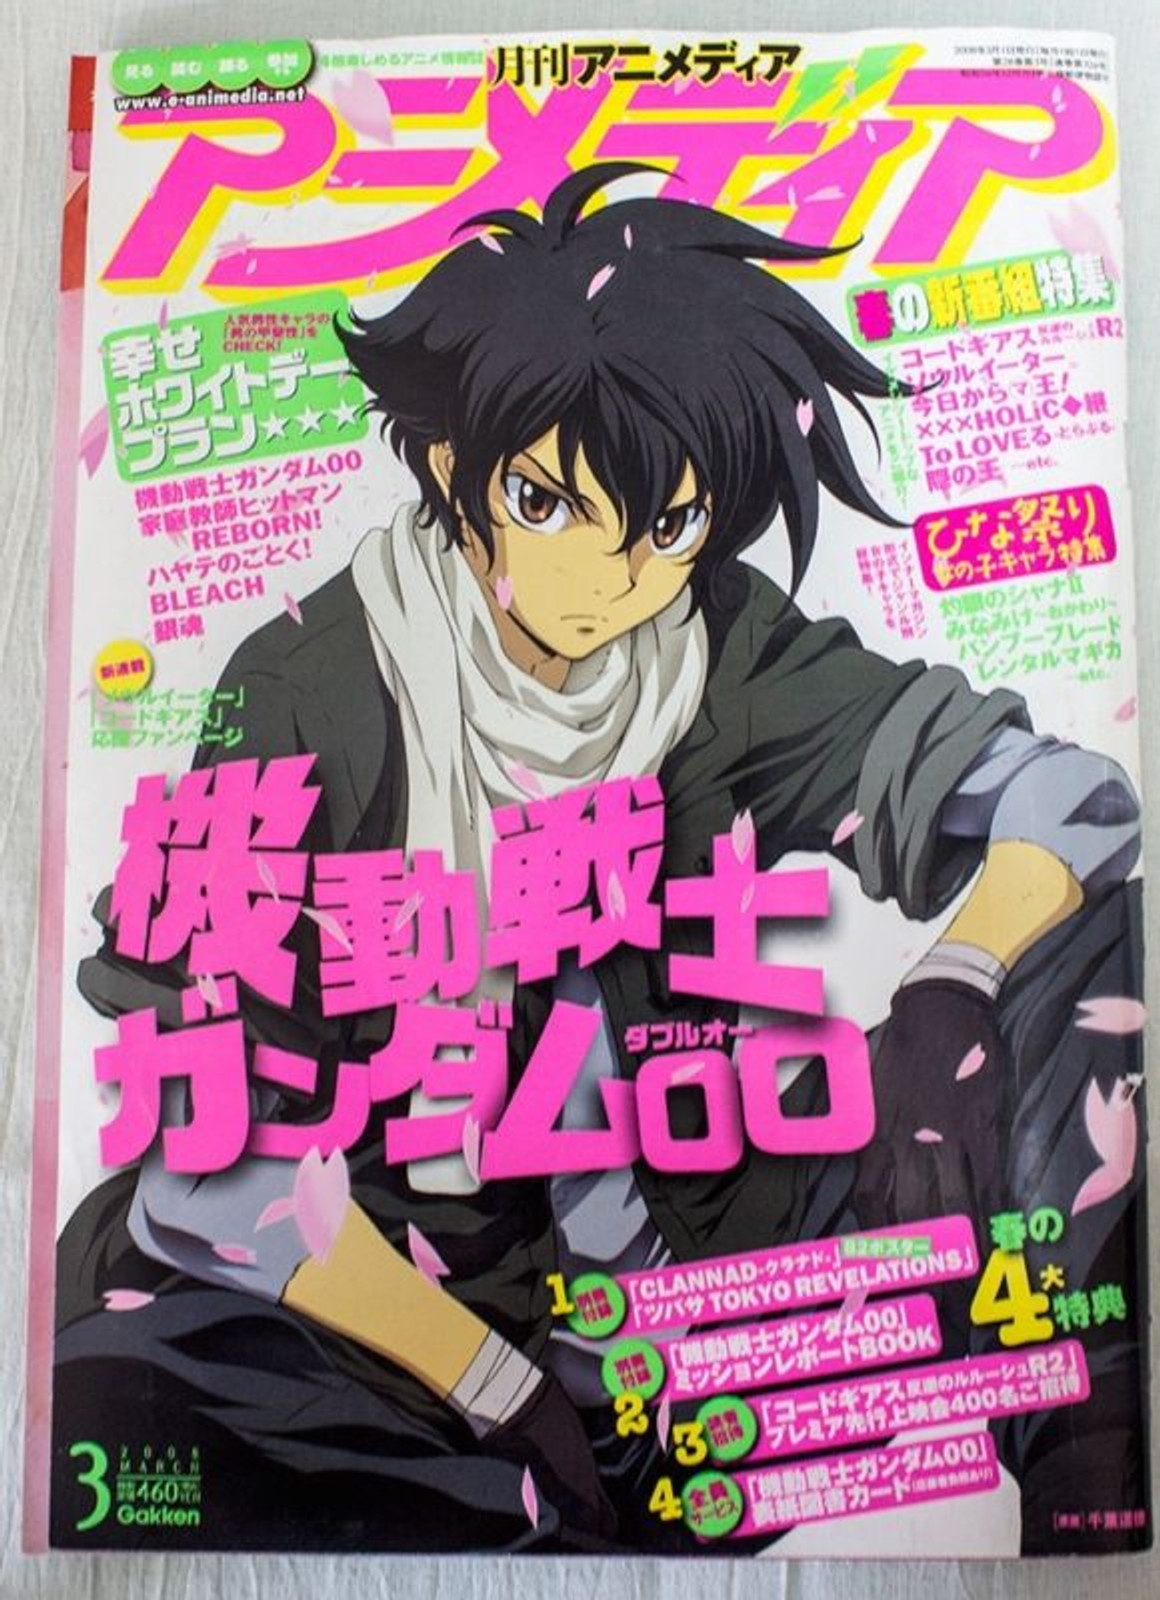 Animedia Japan Anime Magazine 03/2008 Gakken / GUNDAM 00/CODE GEASS/MINAMIKE/ARIA/BLEACH